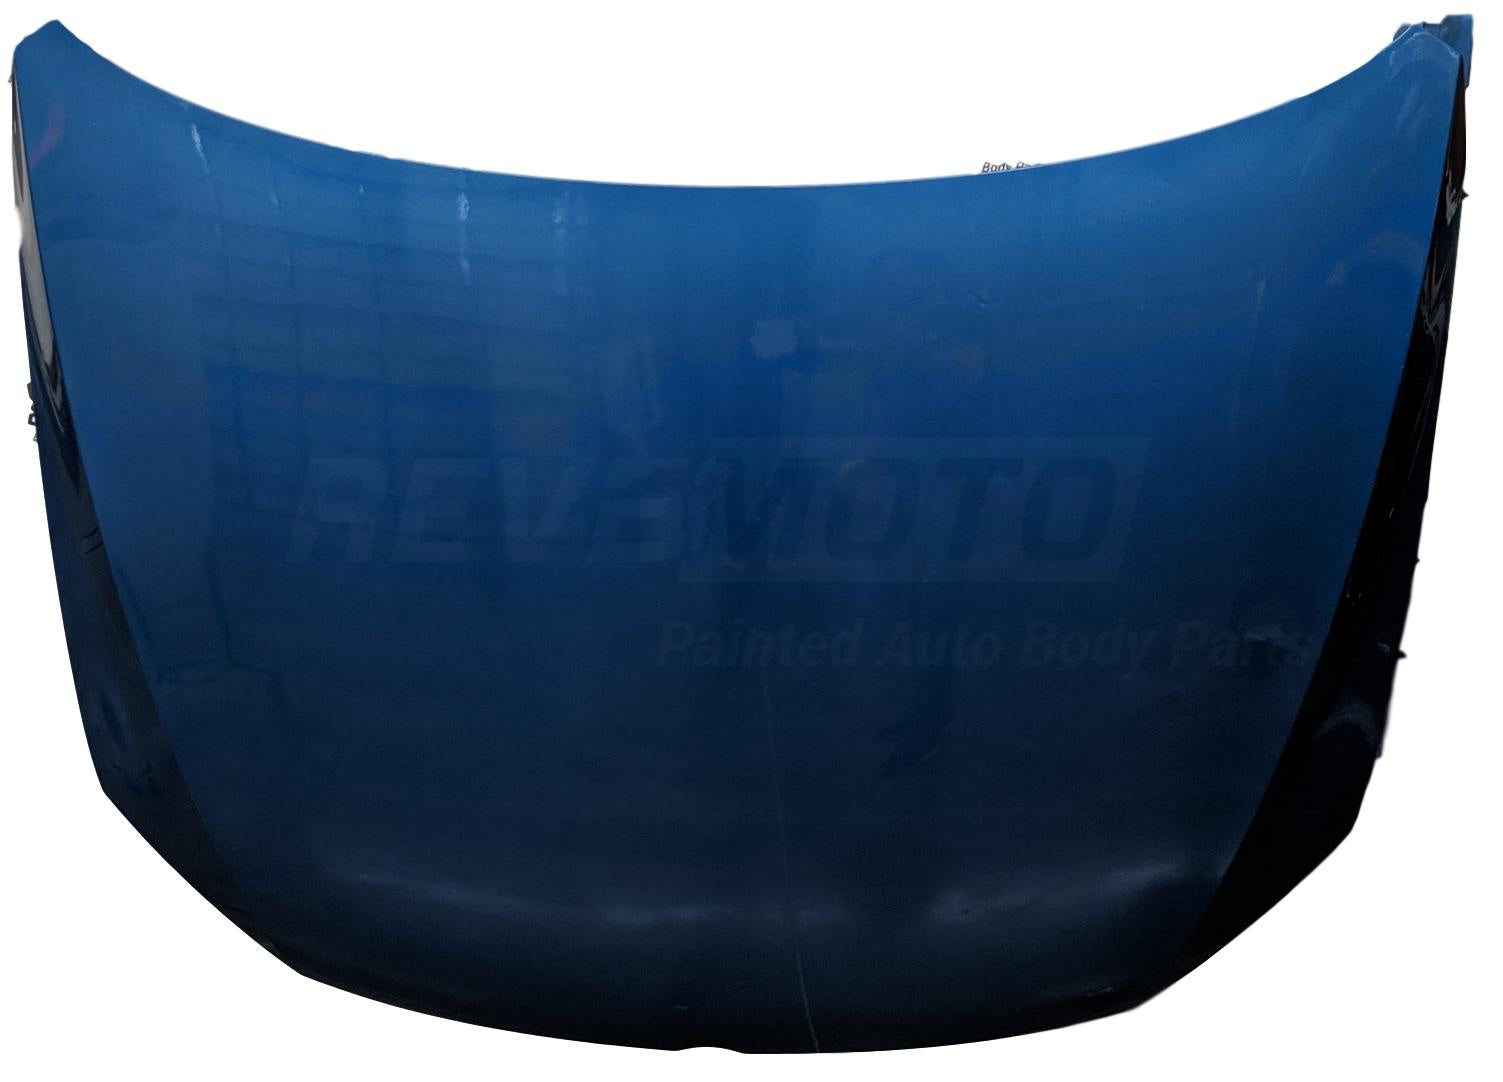 2015 Volkswagen Jetta Hood Painted Blue Slik Metalic (LD5L)